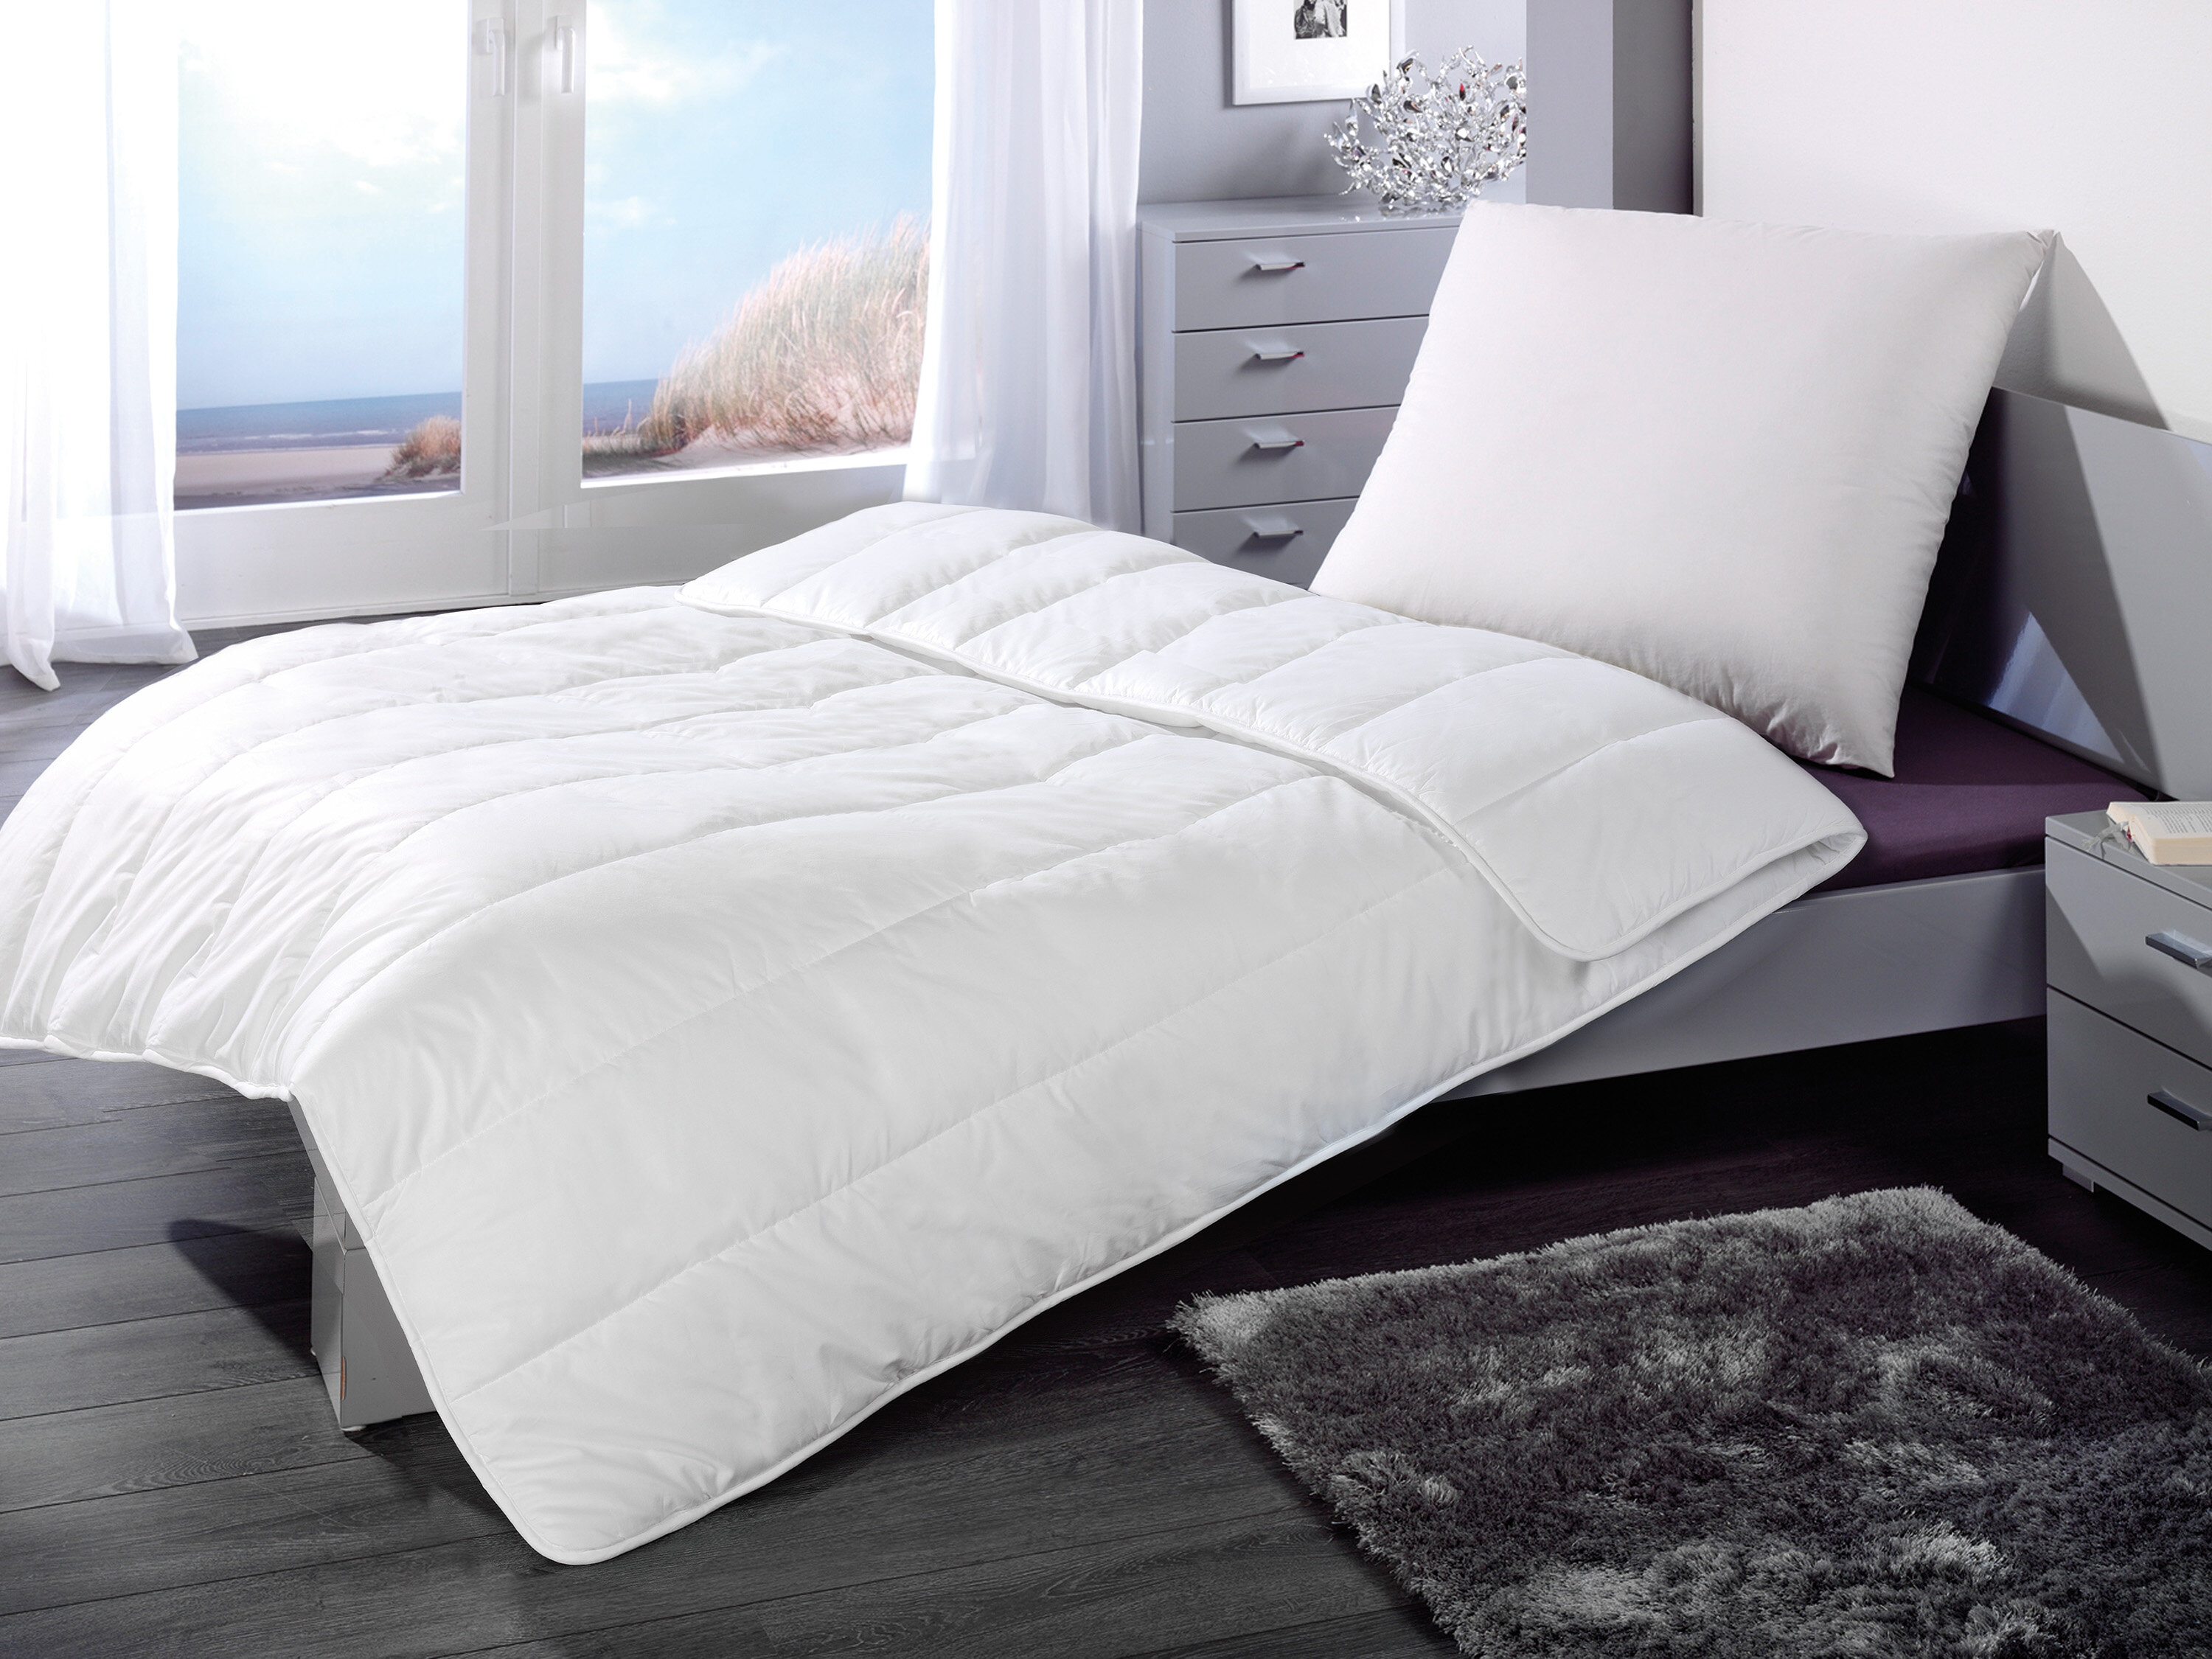 Wayfair Basics Bettdecke aus Polyester mit Kissen & Bewertungen